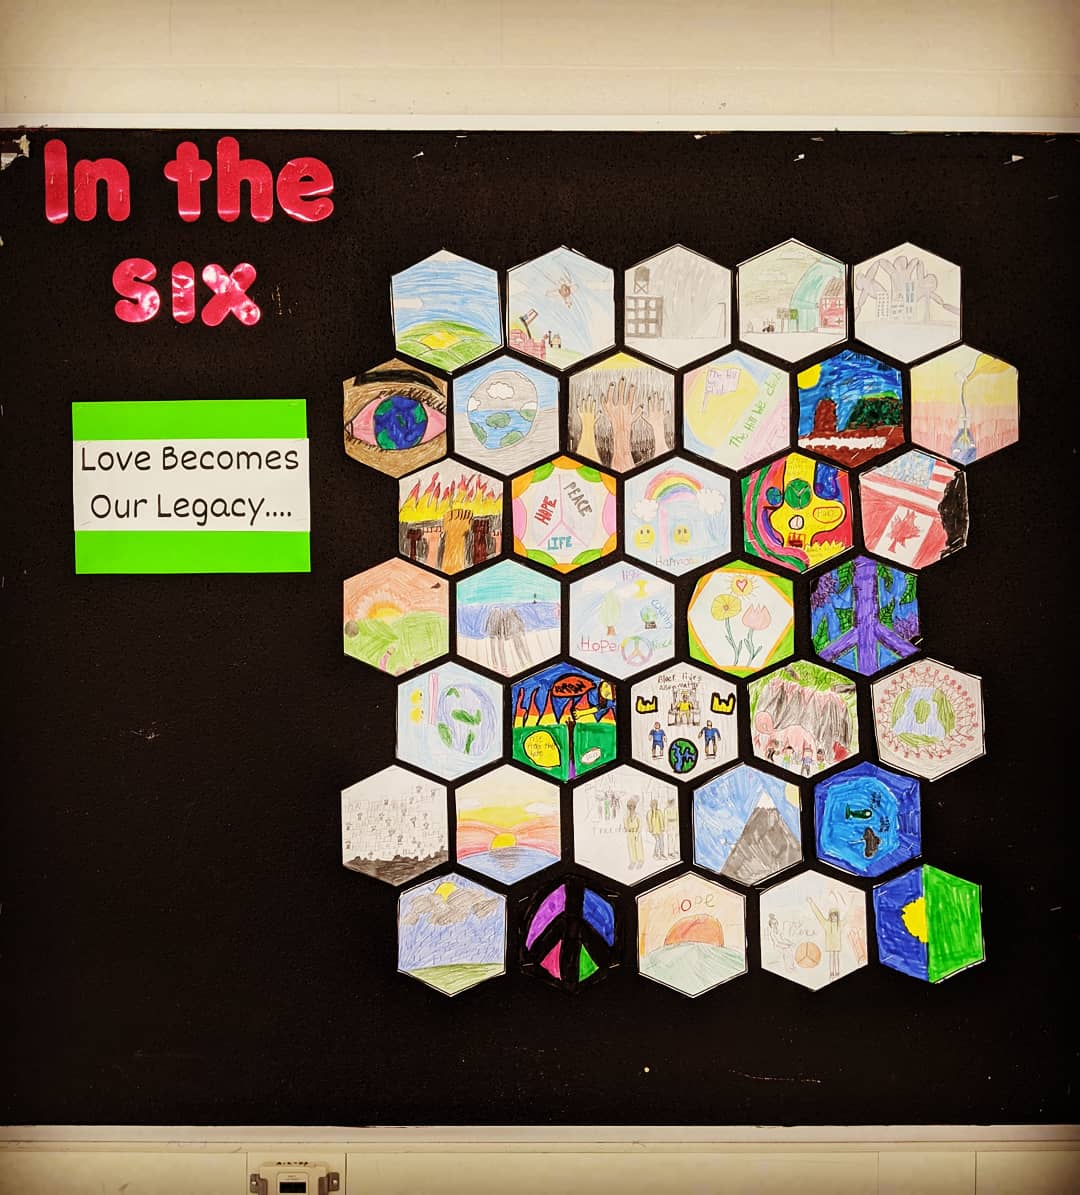 Classroom Quilt inspired by 'The Hill We Climb' by Amanda Gorman #inthesix @allan_drive #pdsb #love #allandrive6E4 awww